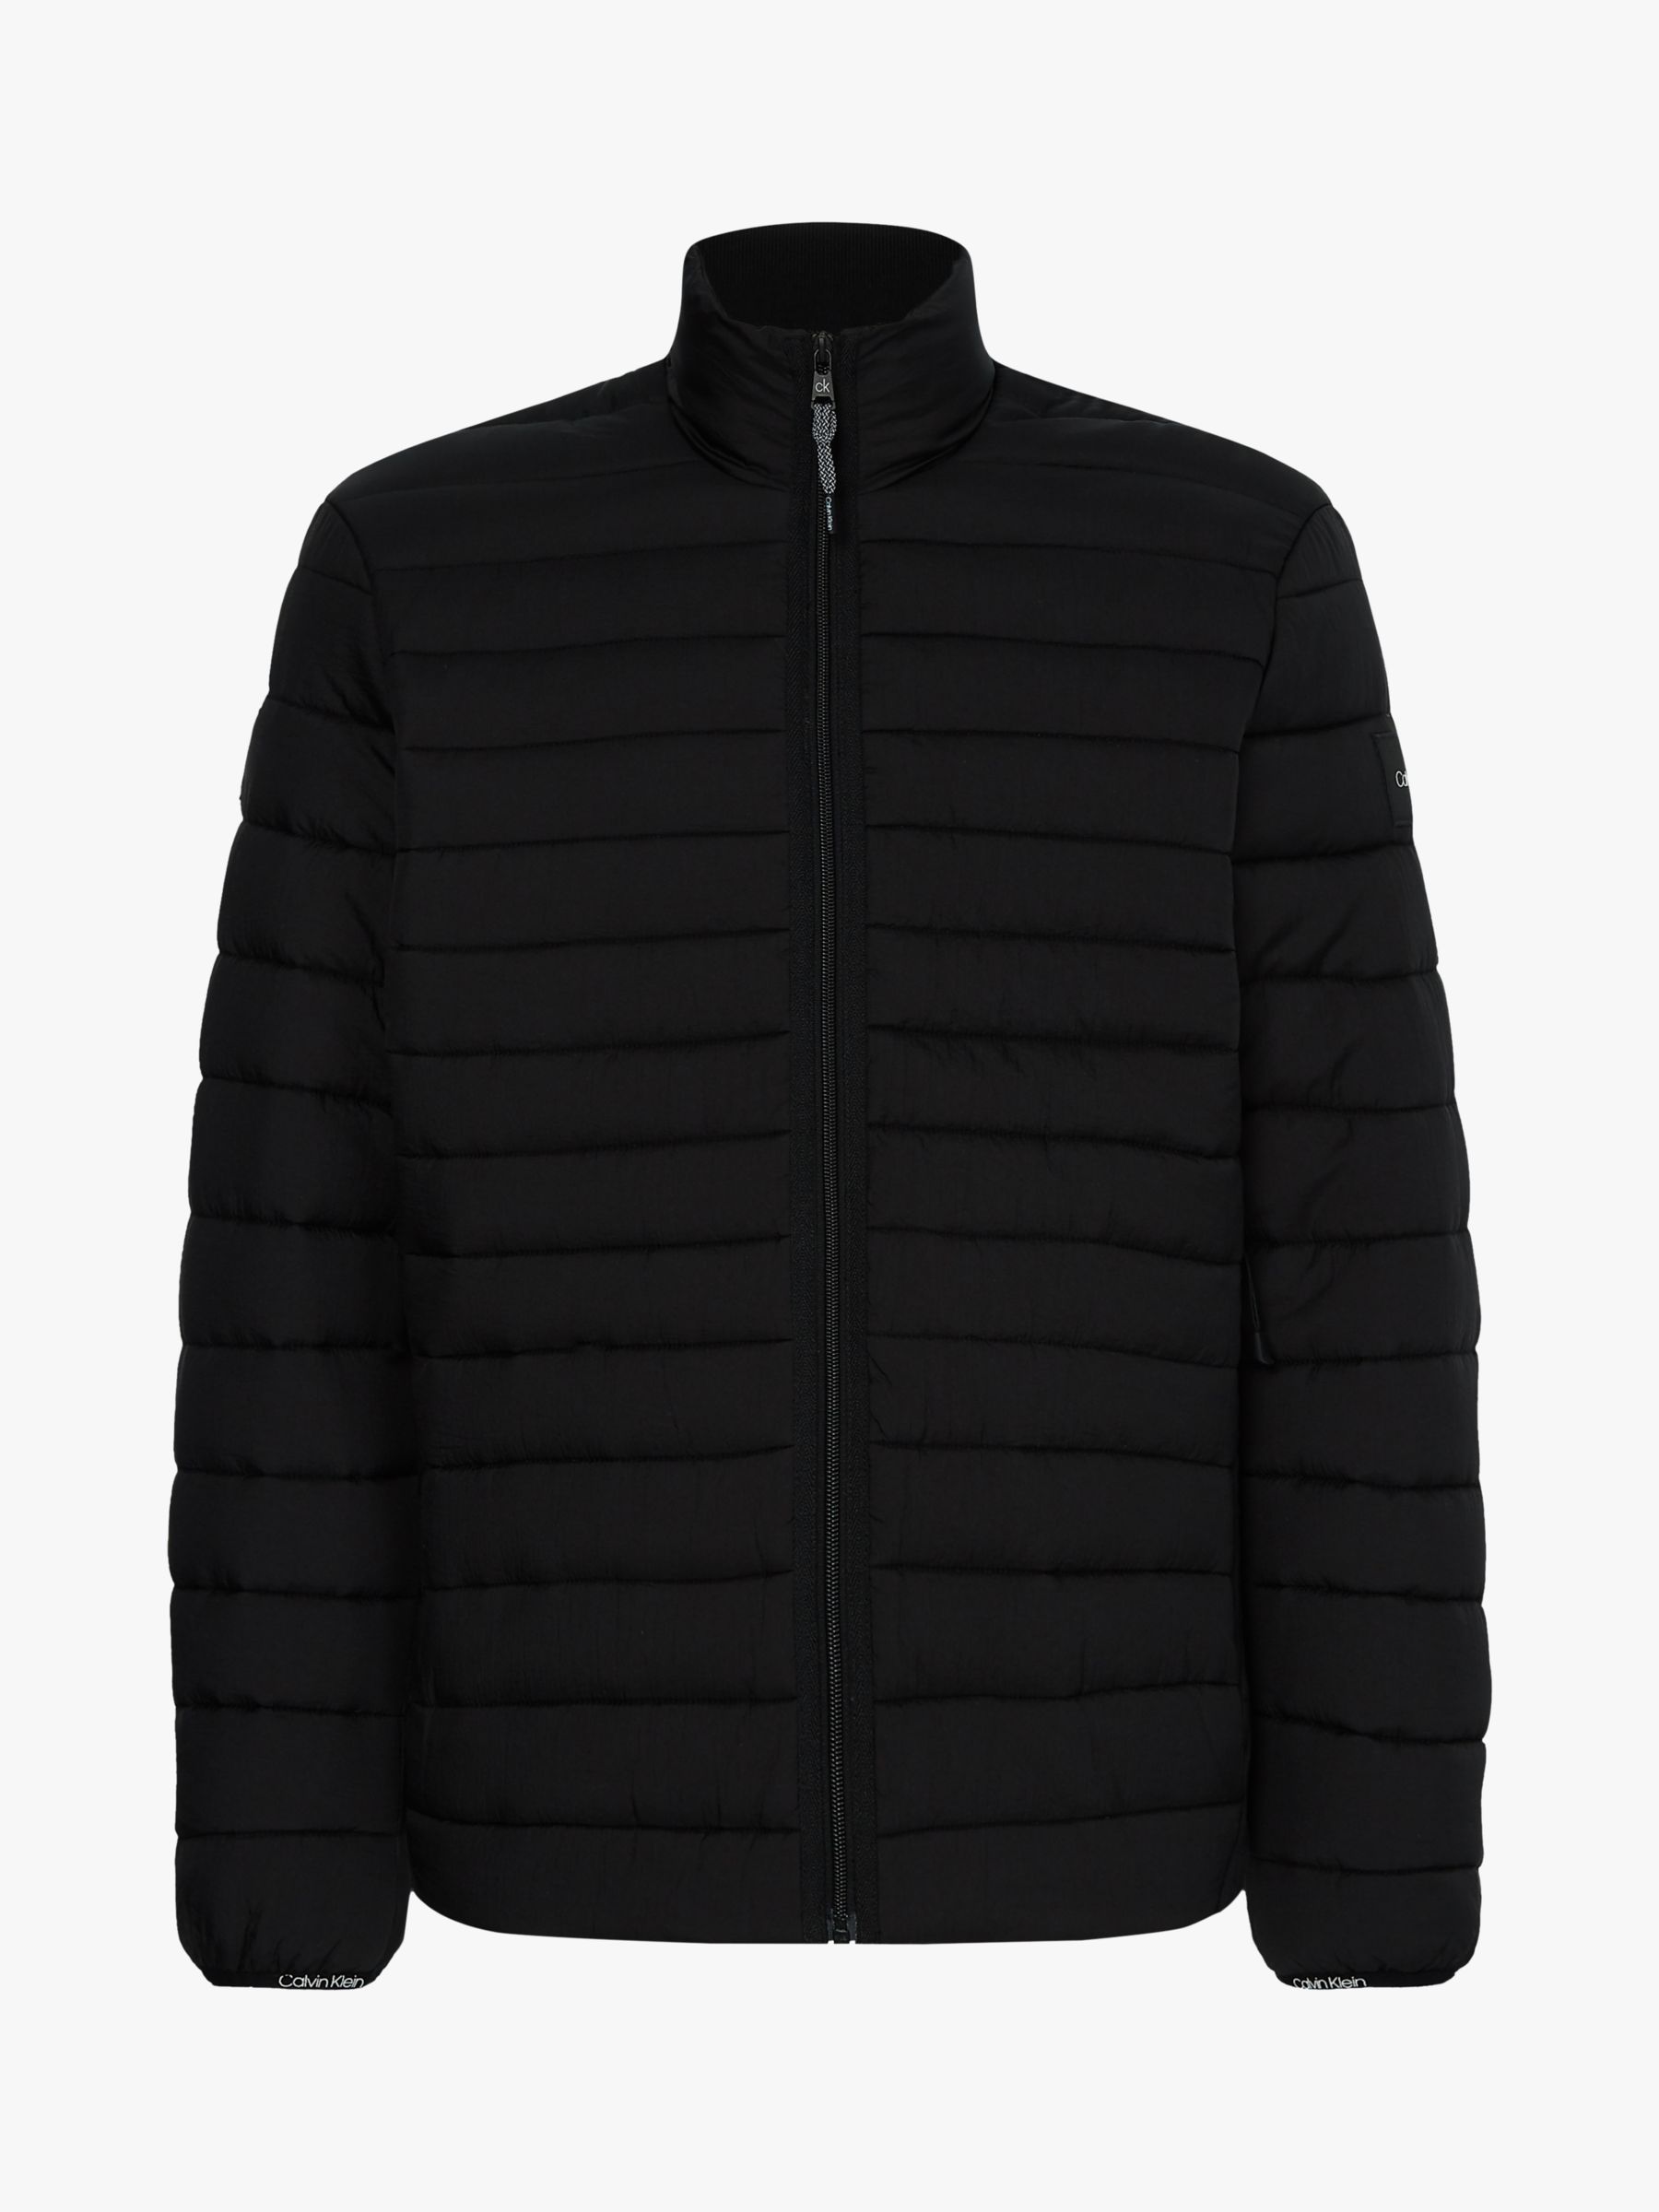 Calvin Klein Crinkle Nylon Padded Jacket, CK Black at John Lewis & Partners